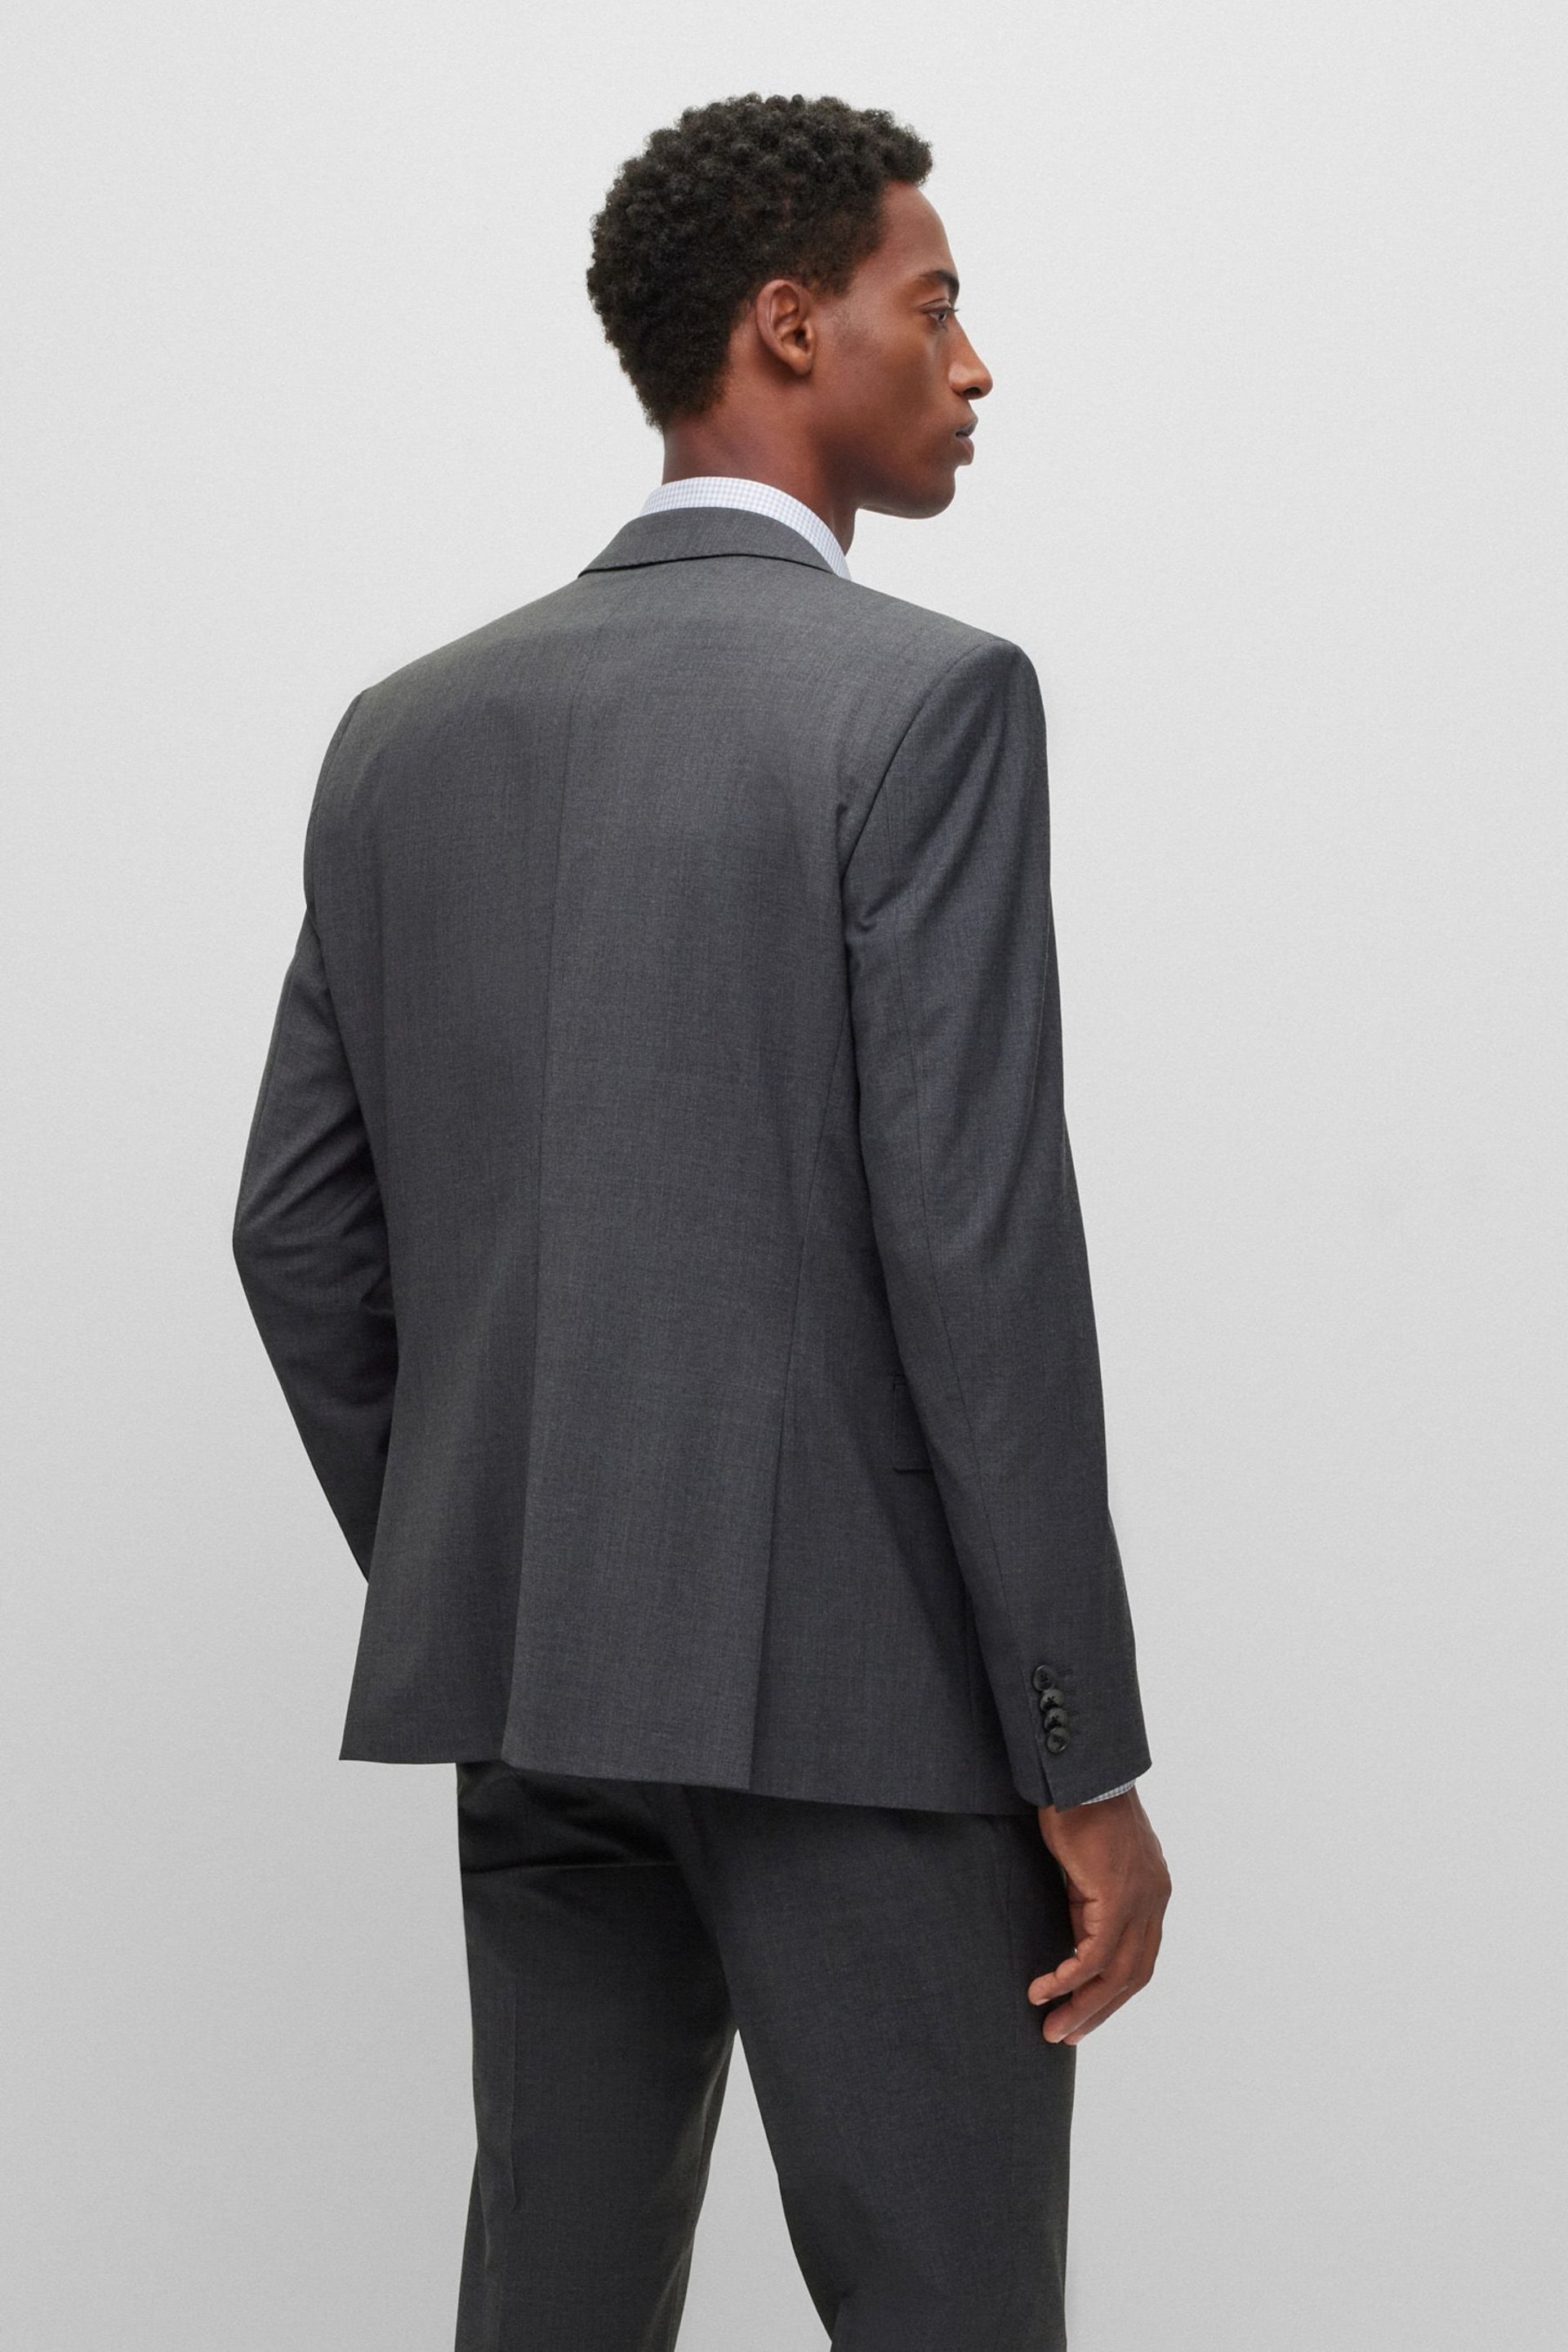 BOSS Grey Slim Fit Suit: Jacket - Image 4 of 7